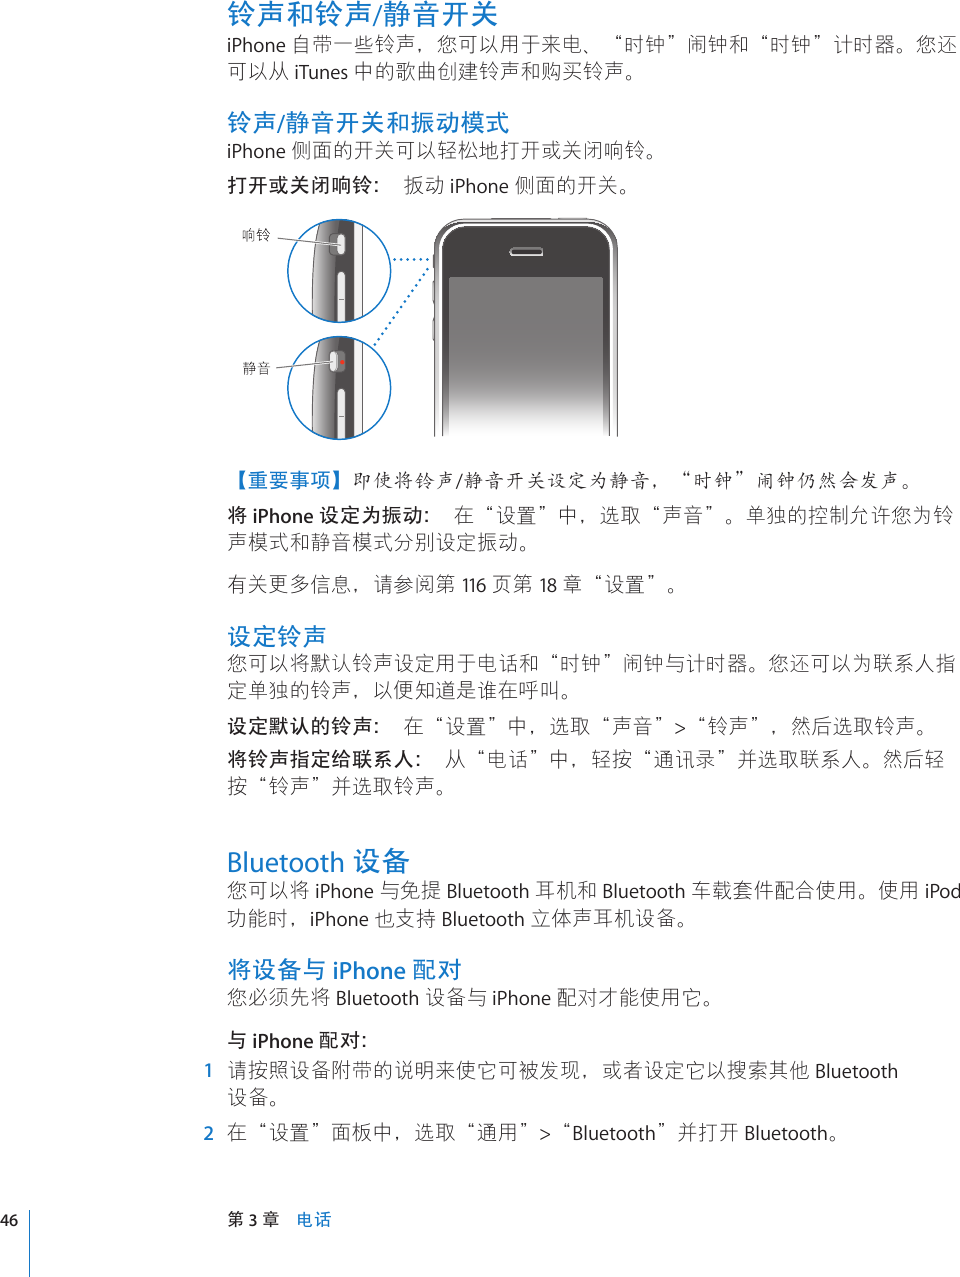 Apple Iphone Original 使用手册i Phone 适用于os 3 1 软件 Os3 1 User Guide Ch